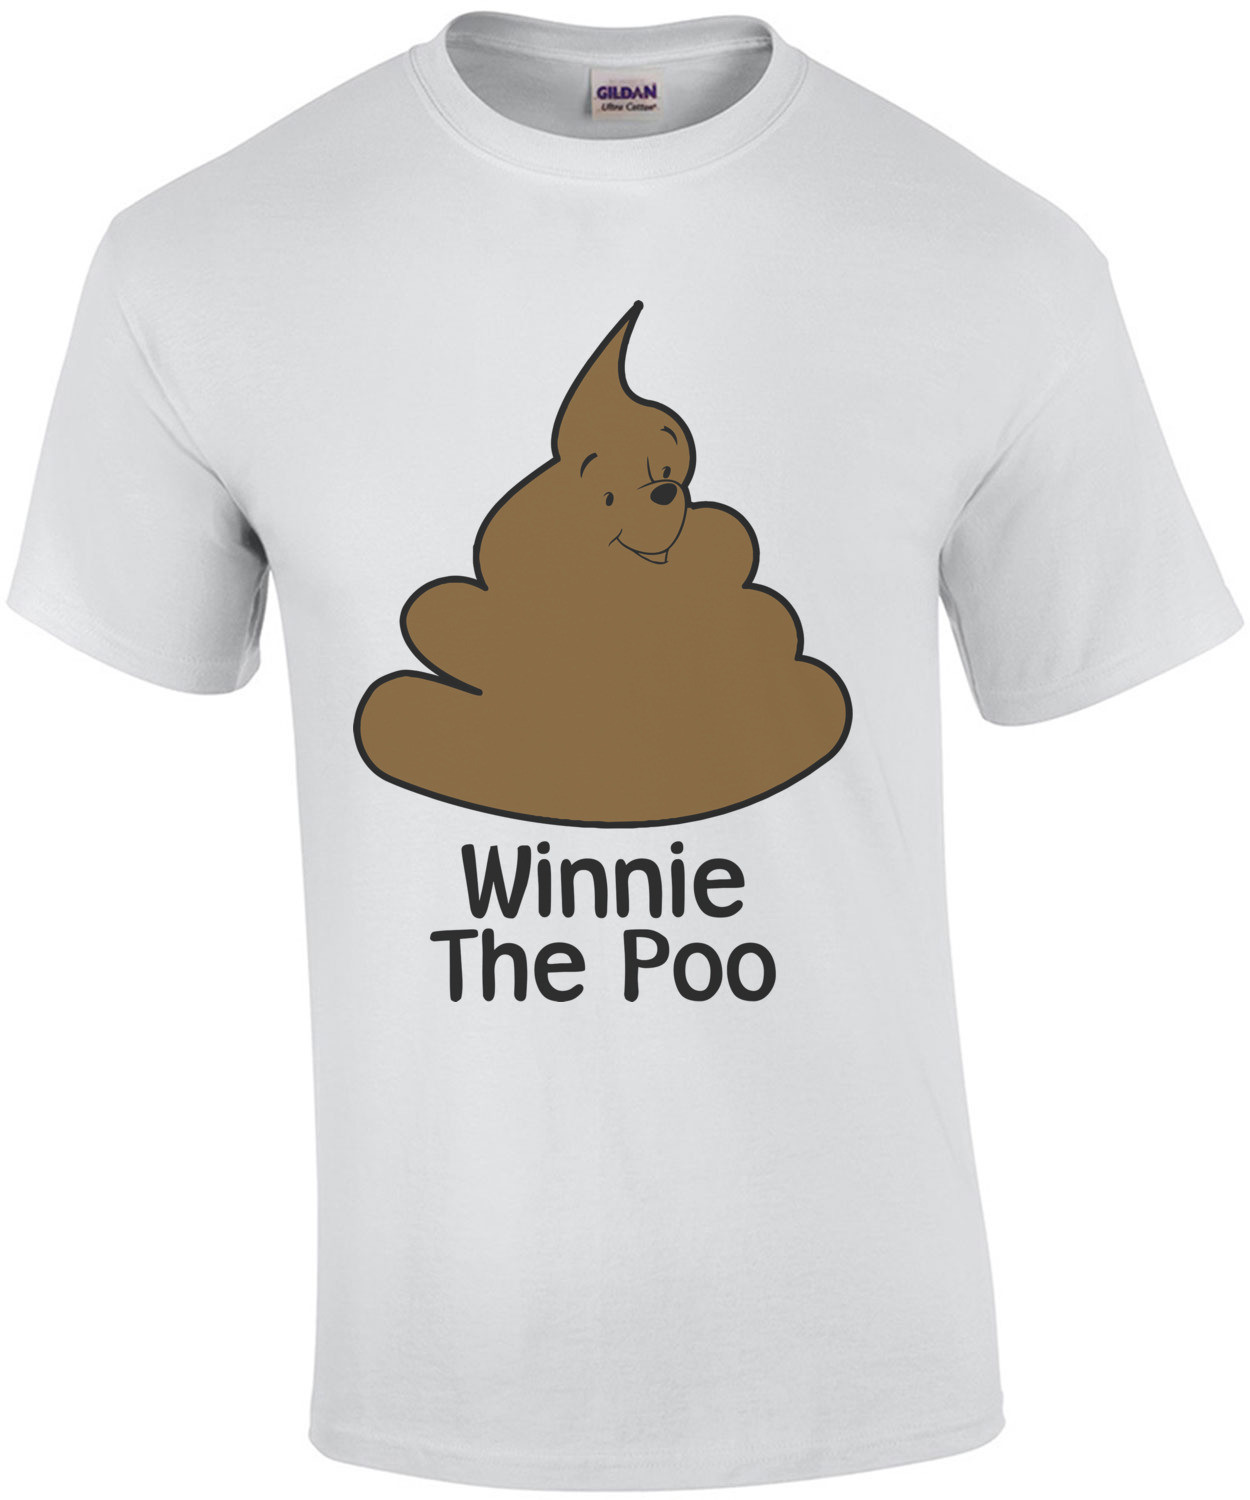 Winnie The Poo Tee Shirt